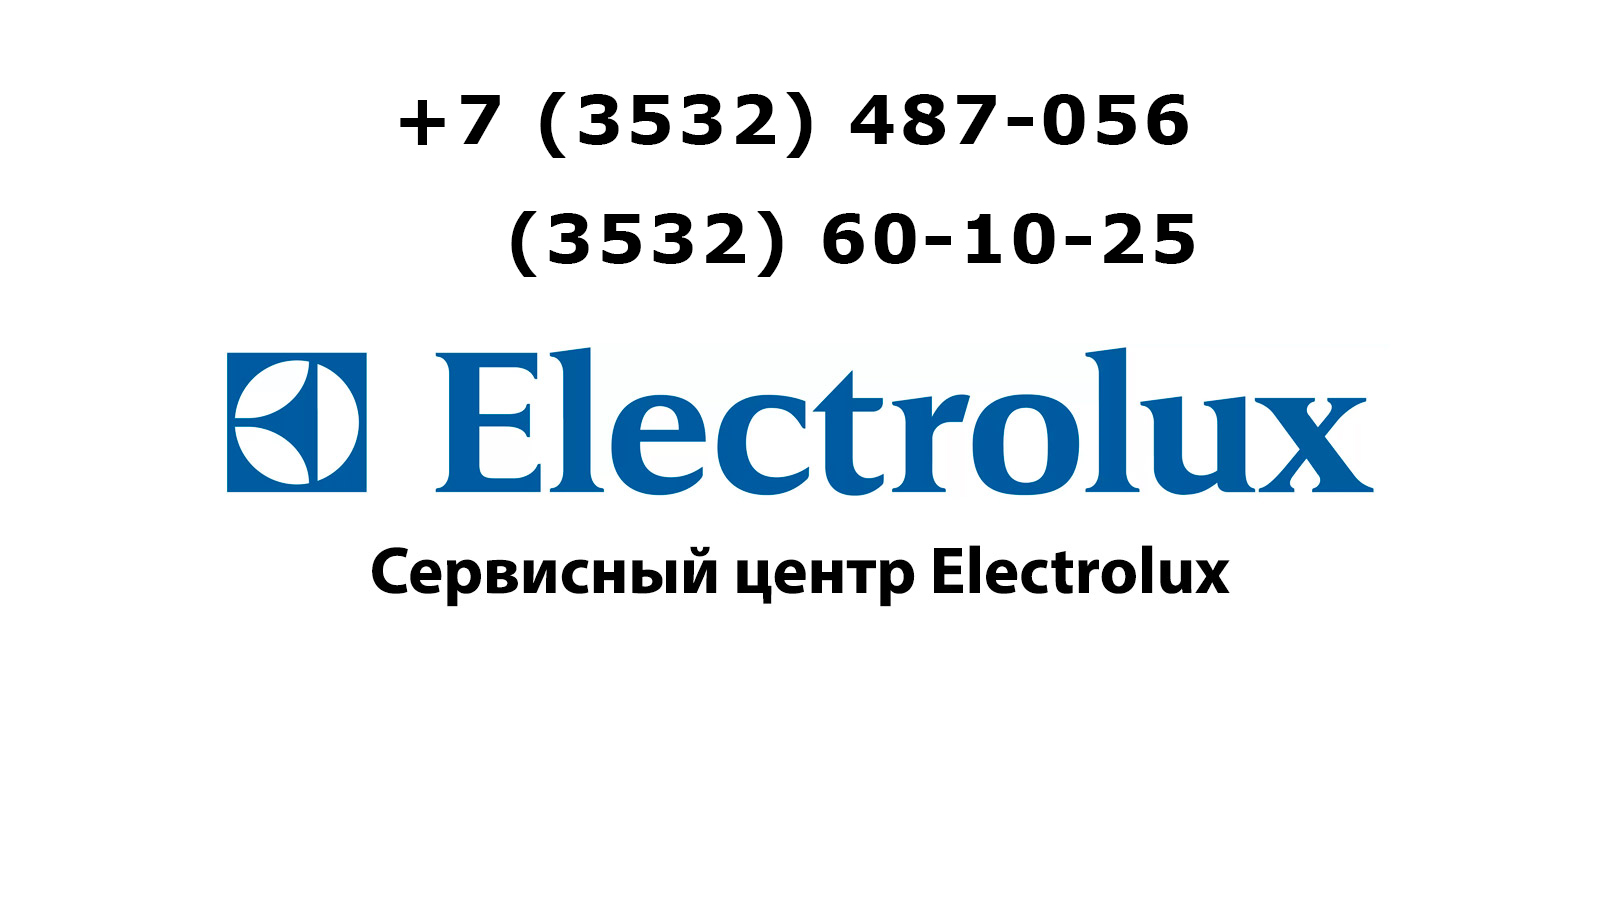 Сервисный центр electrolux отзывы. Сервисный центр Электролюкс. СЦ Электролюкс. Сервисный центр Electrolux в Москве.